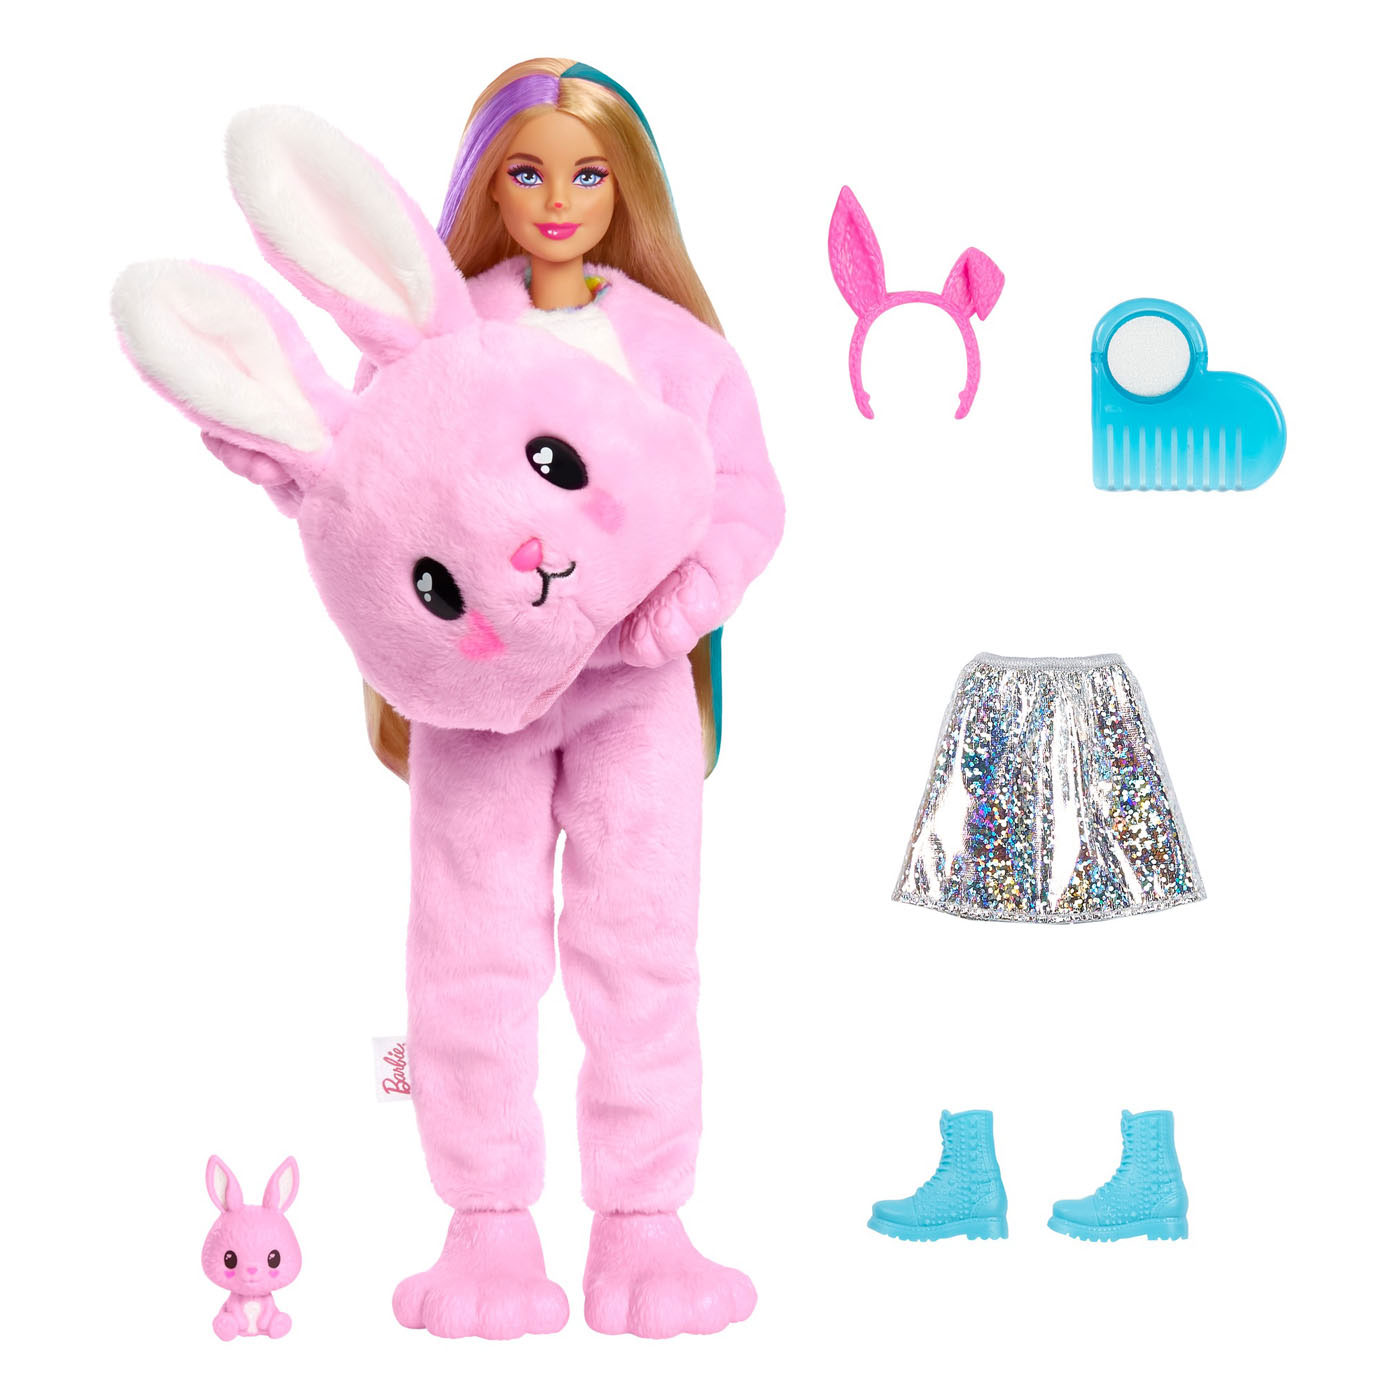 New Barbie Cutie Reveal Chelsea dolls 